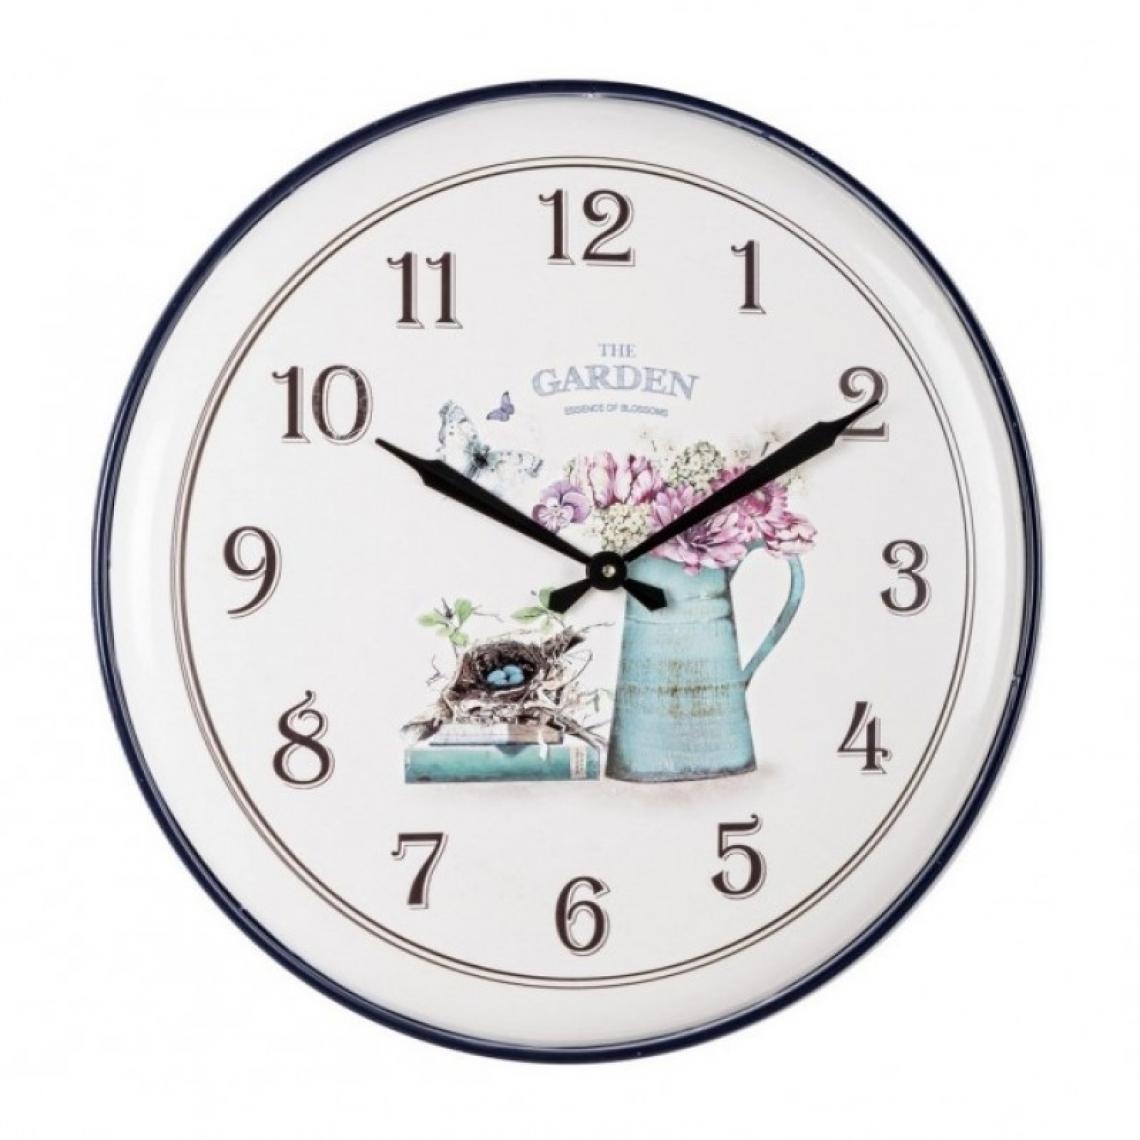 Webmarketpoint - Horloge murale en fer Gardeny D62 cm - Horloges, pendules